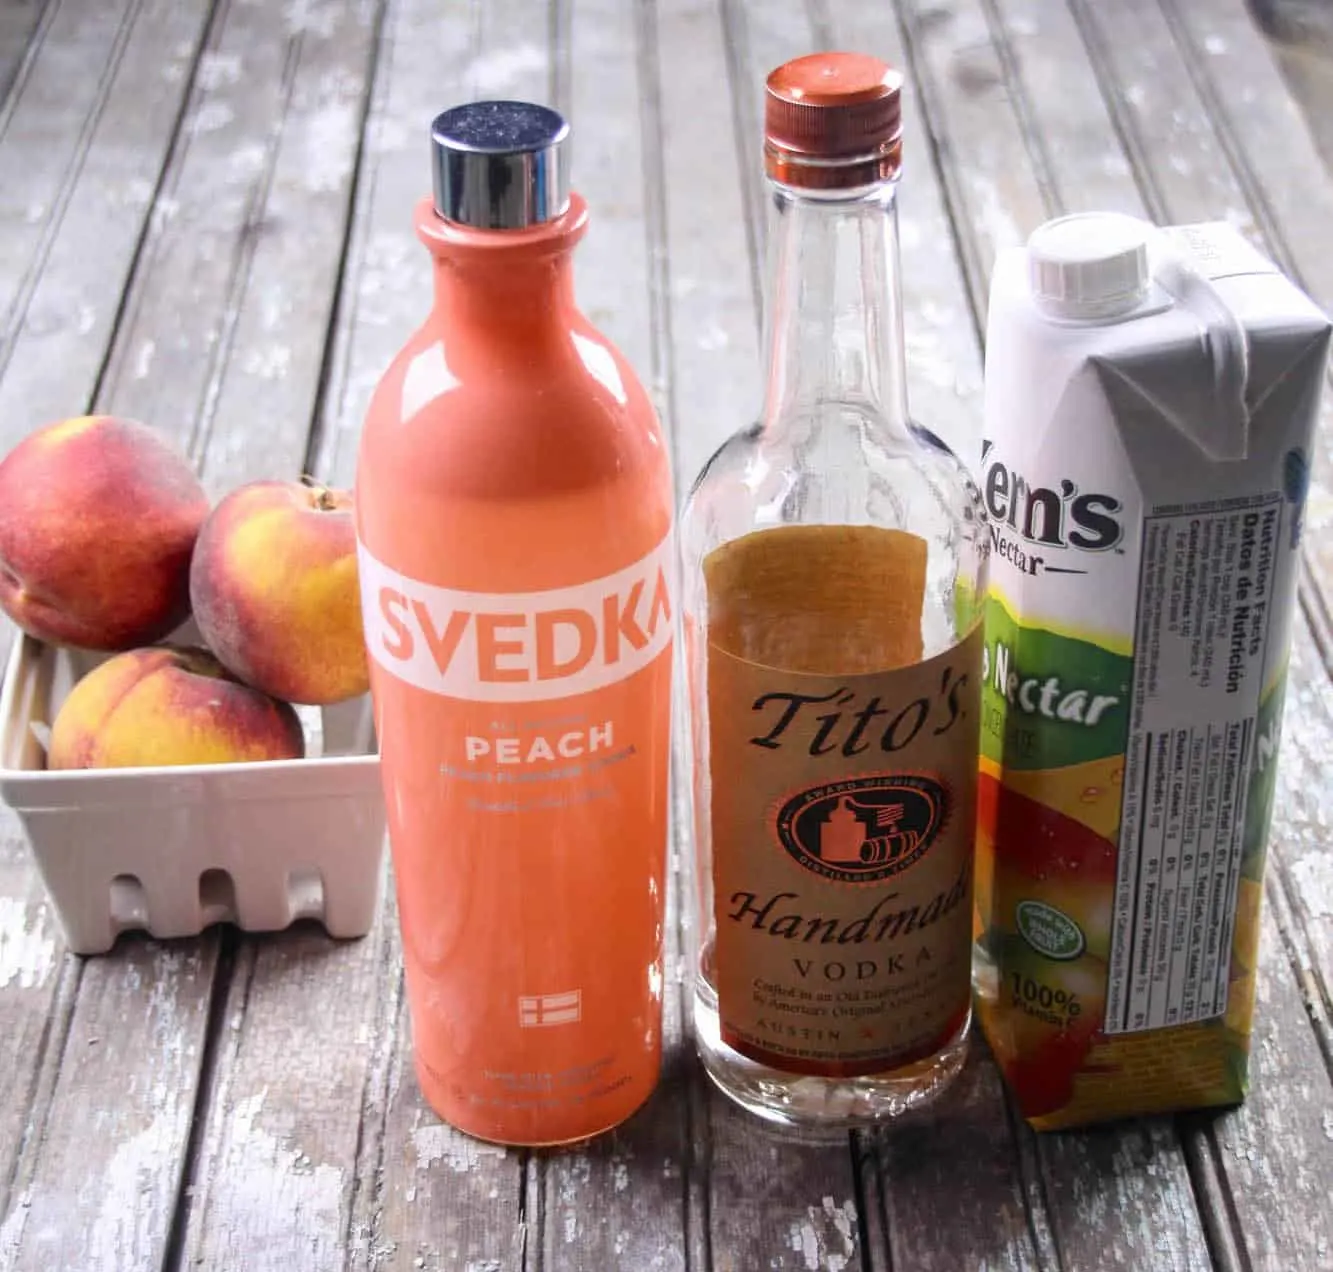 Svedka peach vodka, Tito's handmade vodka, peaches, and Kern's peach nectar